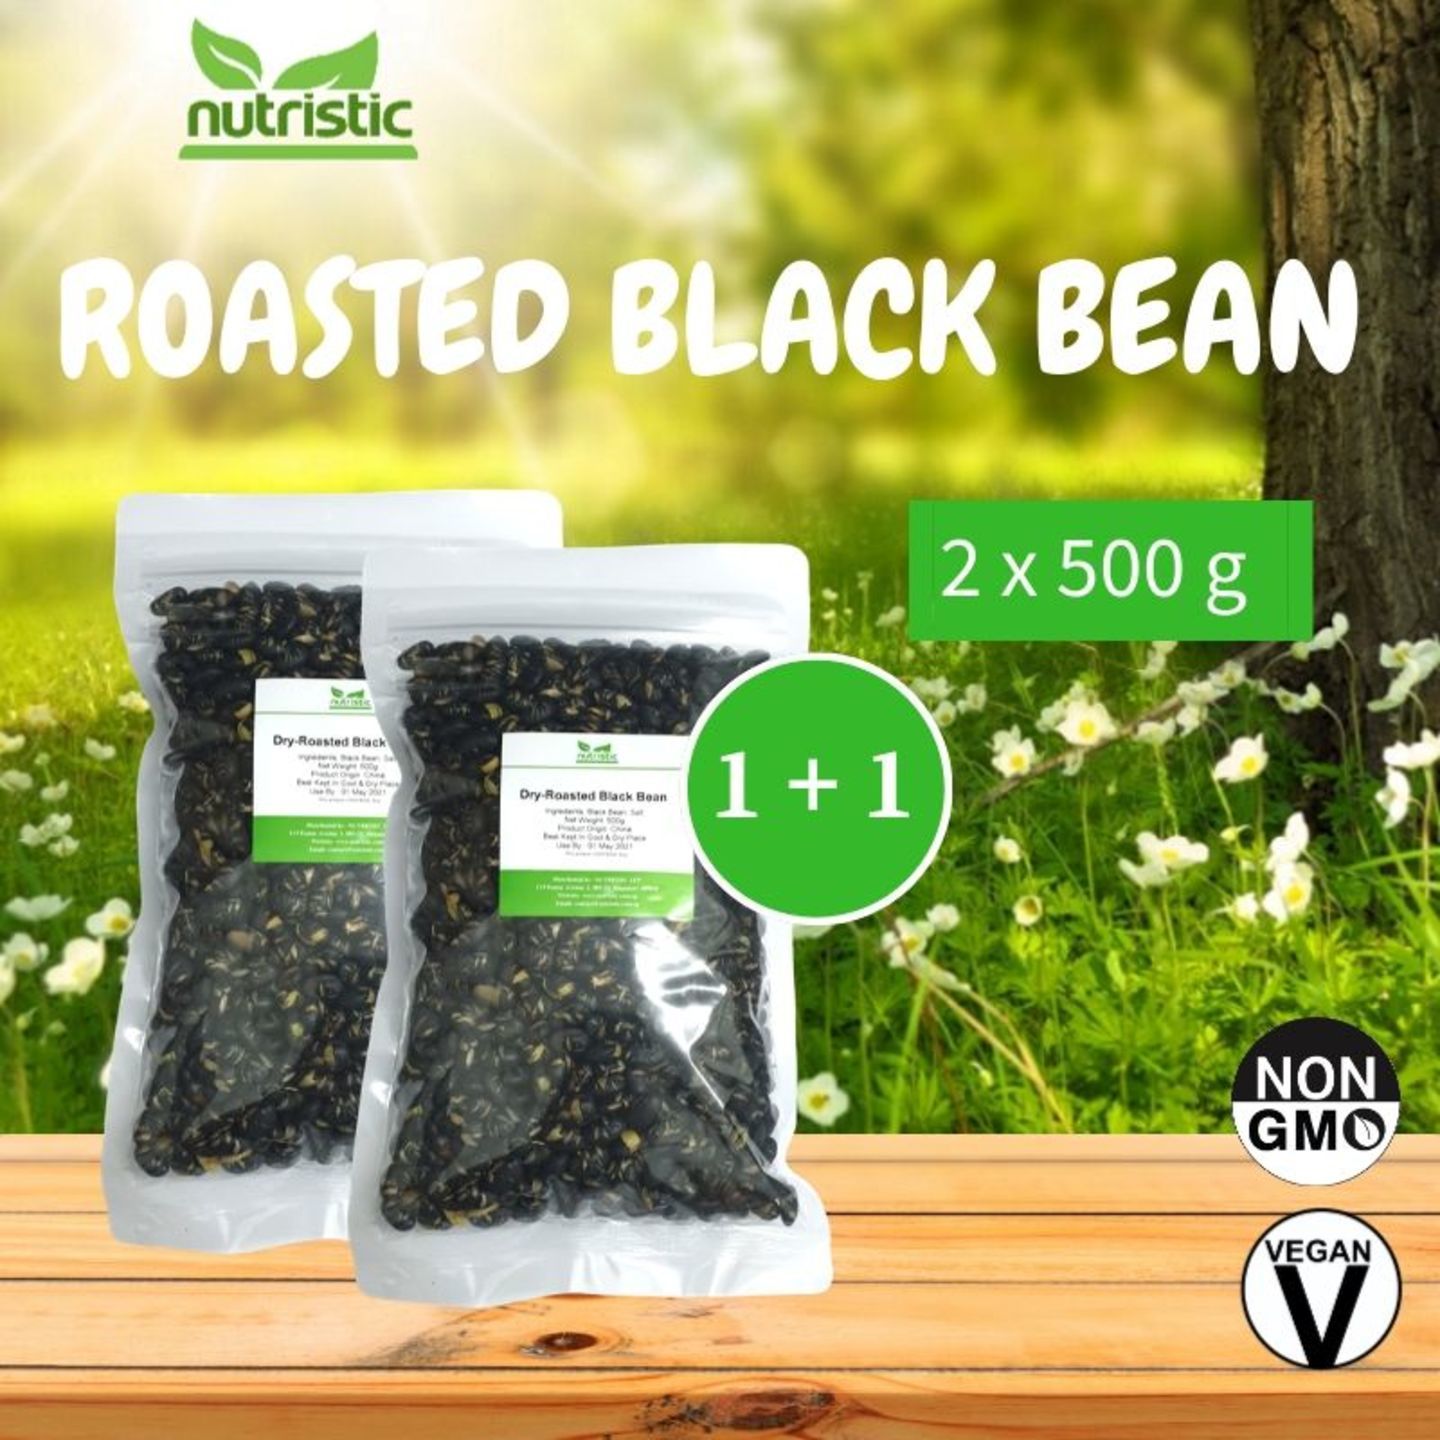 Dry-Roasted Black Beans 500g x2 - Value Bundle 1+1